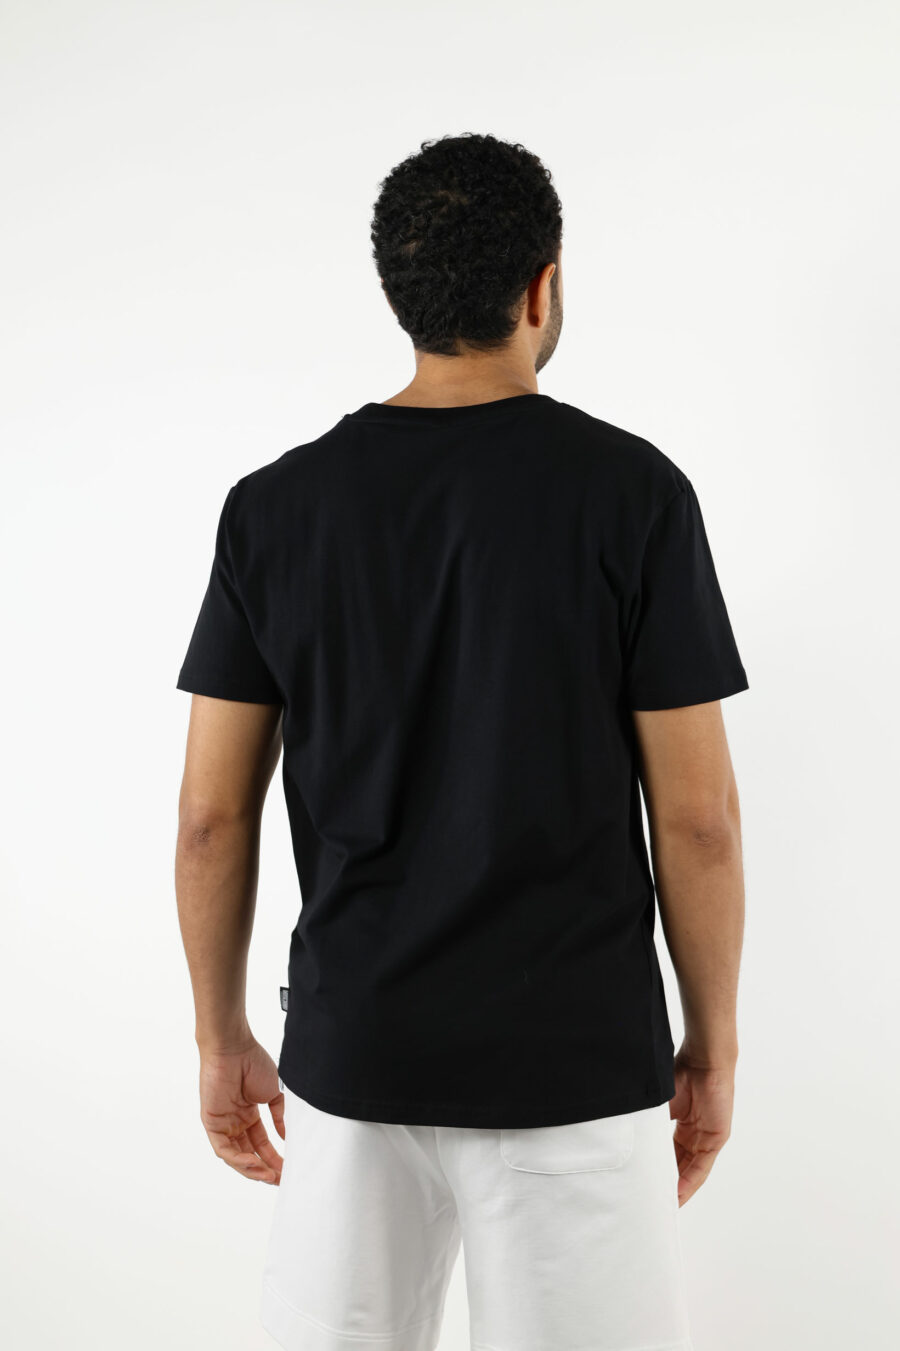 T-shirt preta com mini urso "underbear" em borracha branca - 111016